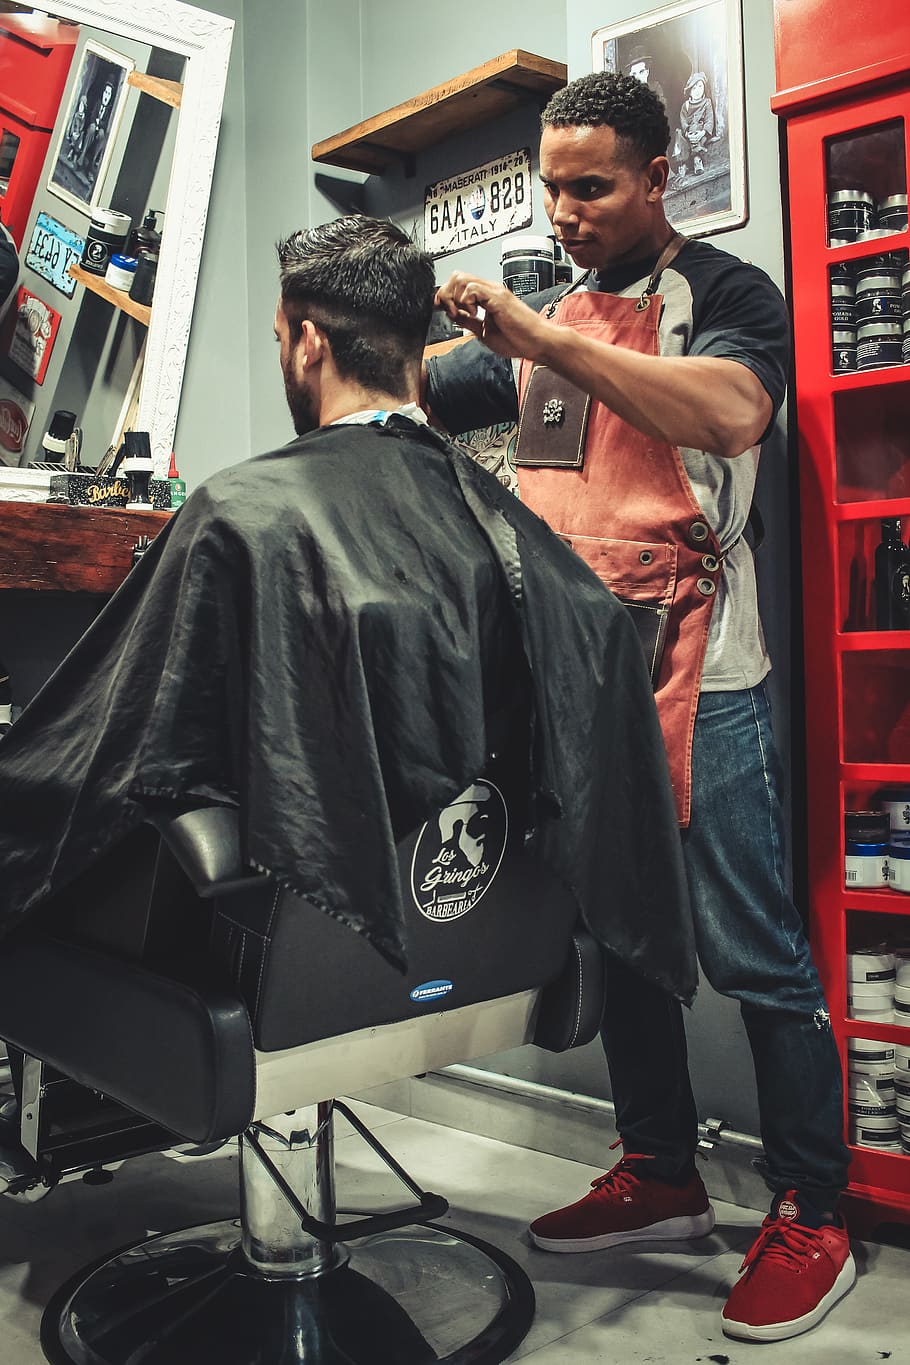 HD wallpaper: Man Cutting Hair Man While Sitting on Barber's Chair,  barbershop | Wallpaper Flare